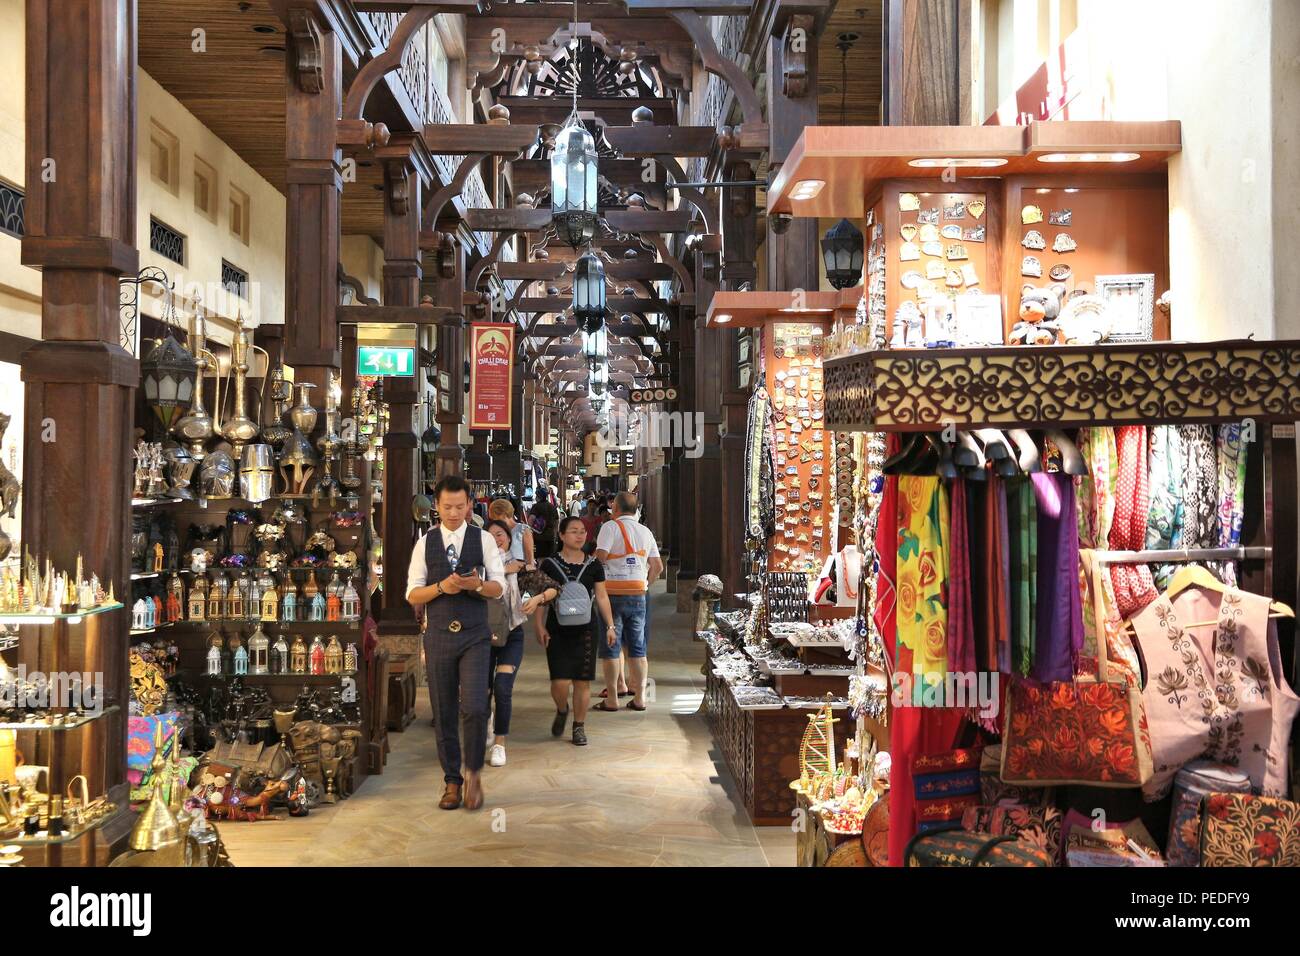 DUBAI, UAE - NOVEMBER 23, 2017: People shop at Souk Madinat Jumeirah in Dubai. The traditional Arab style bazaar is part of Madinat Jumeirah resort. Stock Photo